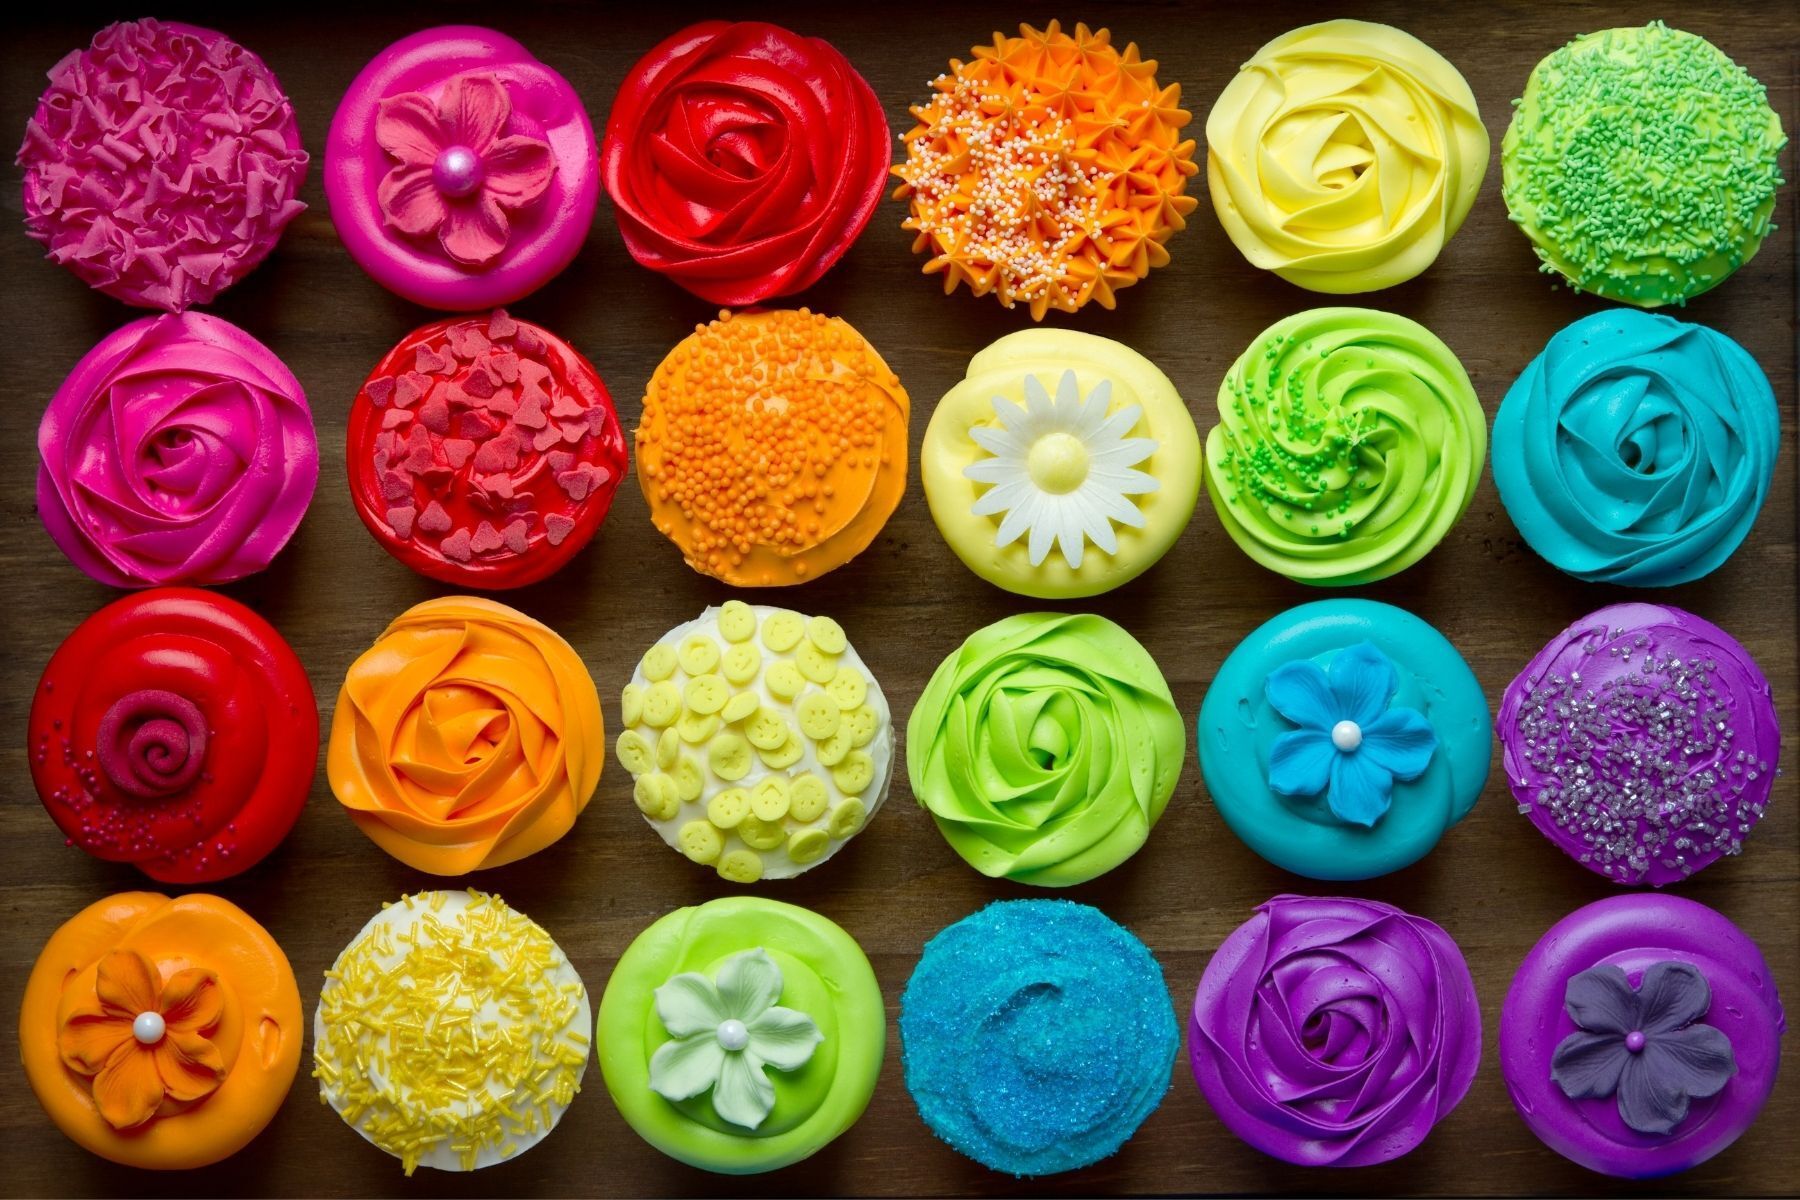 Colorful wedding cupcakes found at Fresno wedding festival